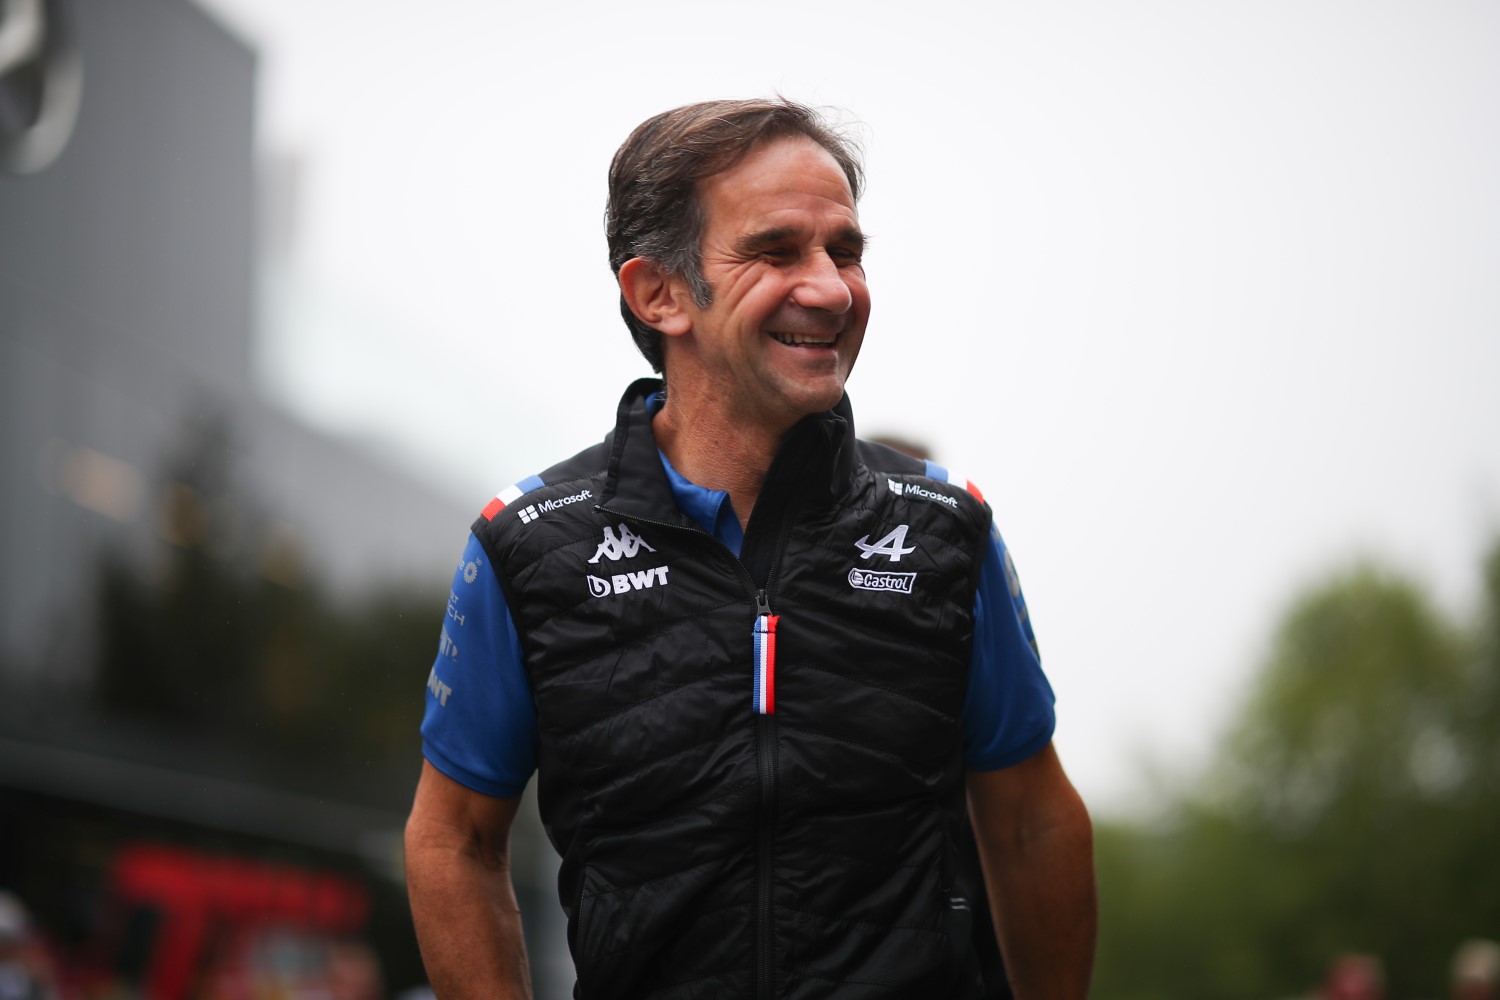 Davide Brivio racing director Alpine during the Belgian GP, 25-28 August 2022 at Spa-Francorchamps track, Formula 1 World championship 2022.